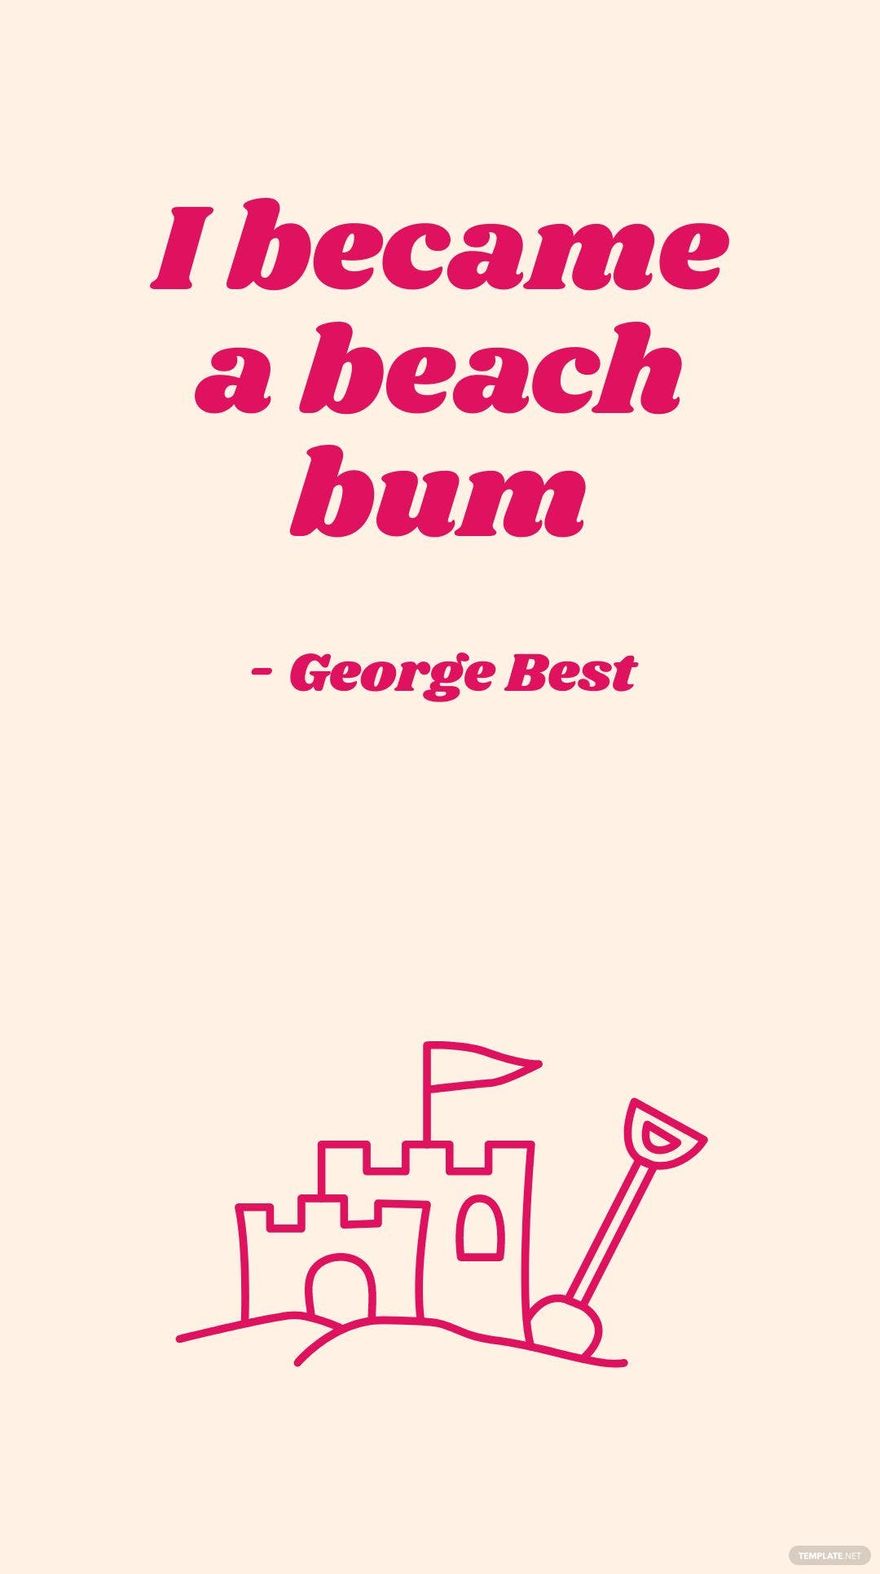 Free George Best - I became a beach bum in JPG